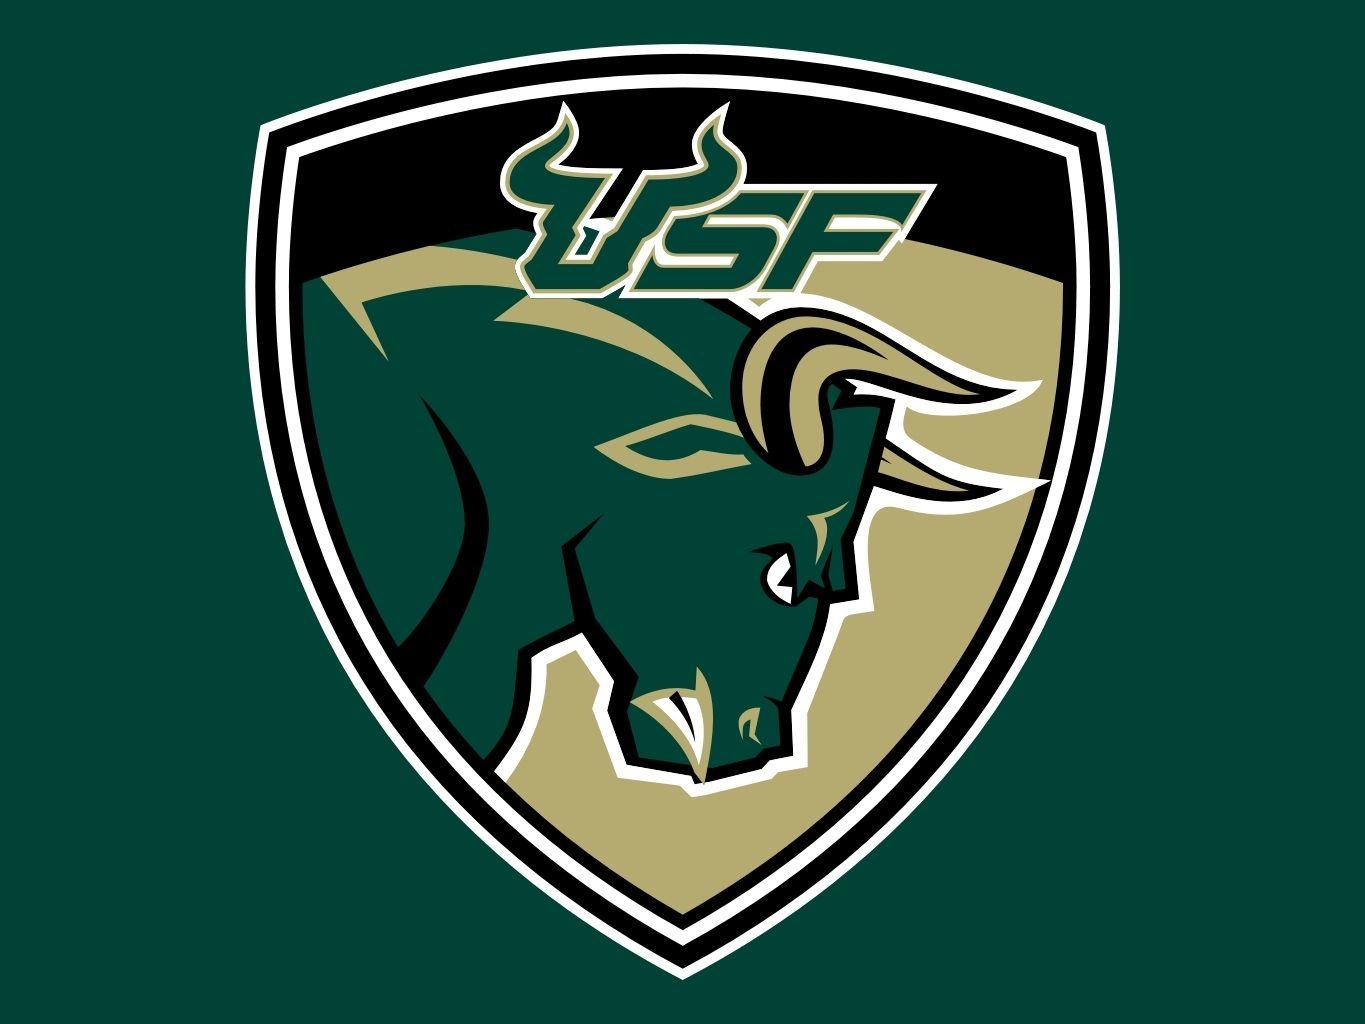 South Florida Bulls Logo - Pin by Florida Girl on University of South Florida | Pinterest ...